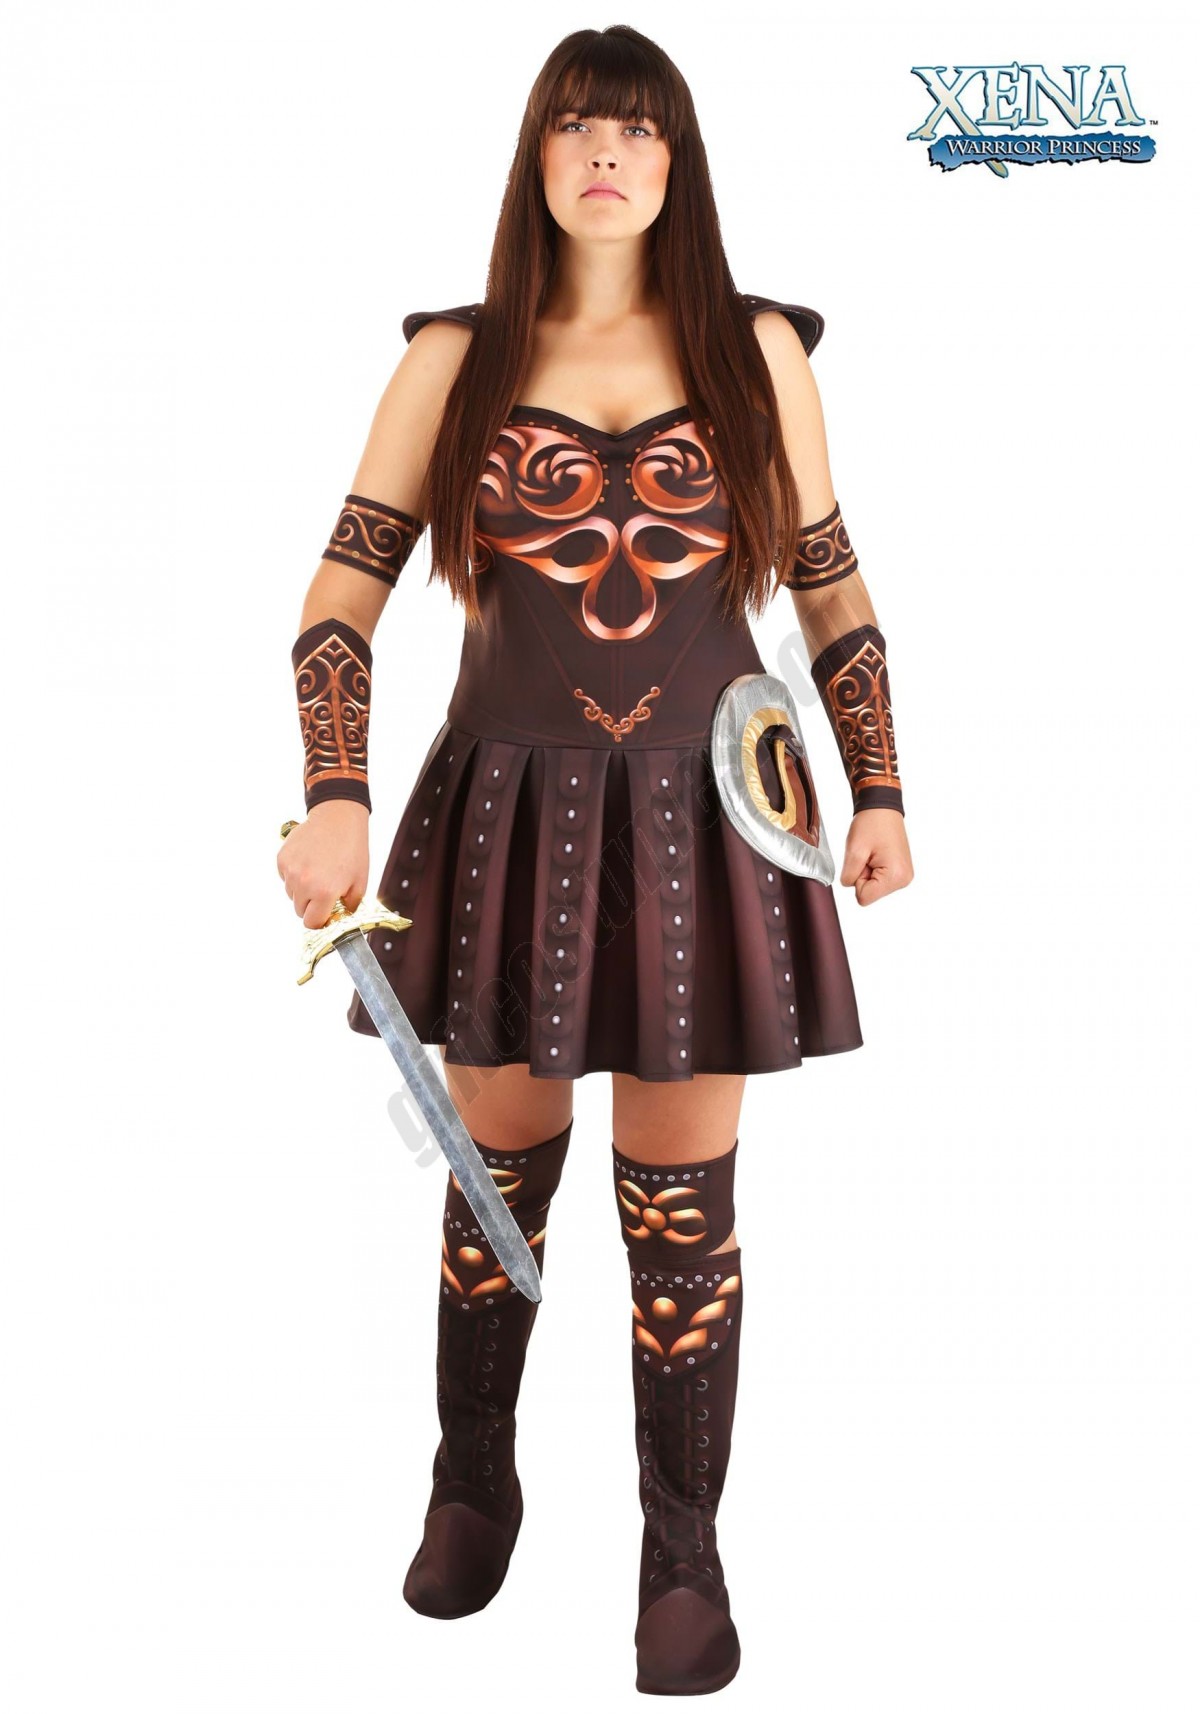 Plus Size Xena Warrior Princess Costume - Women's - -0